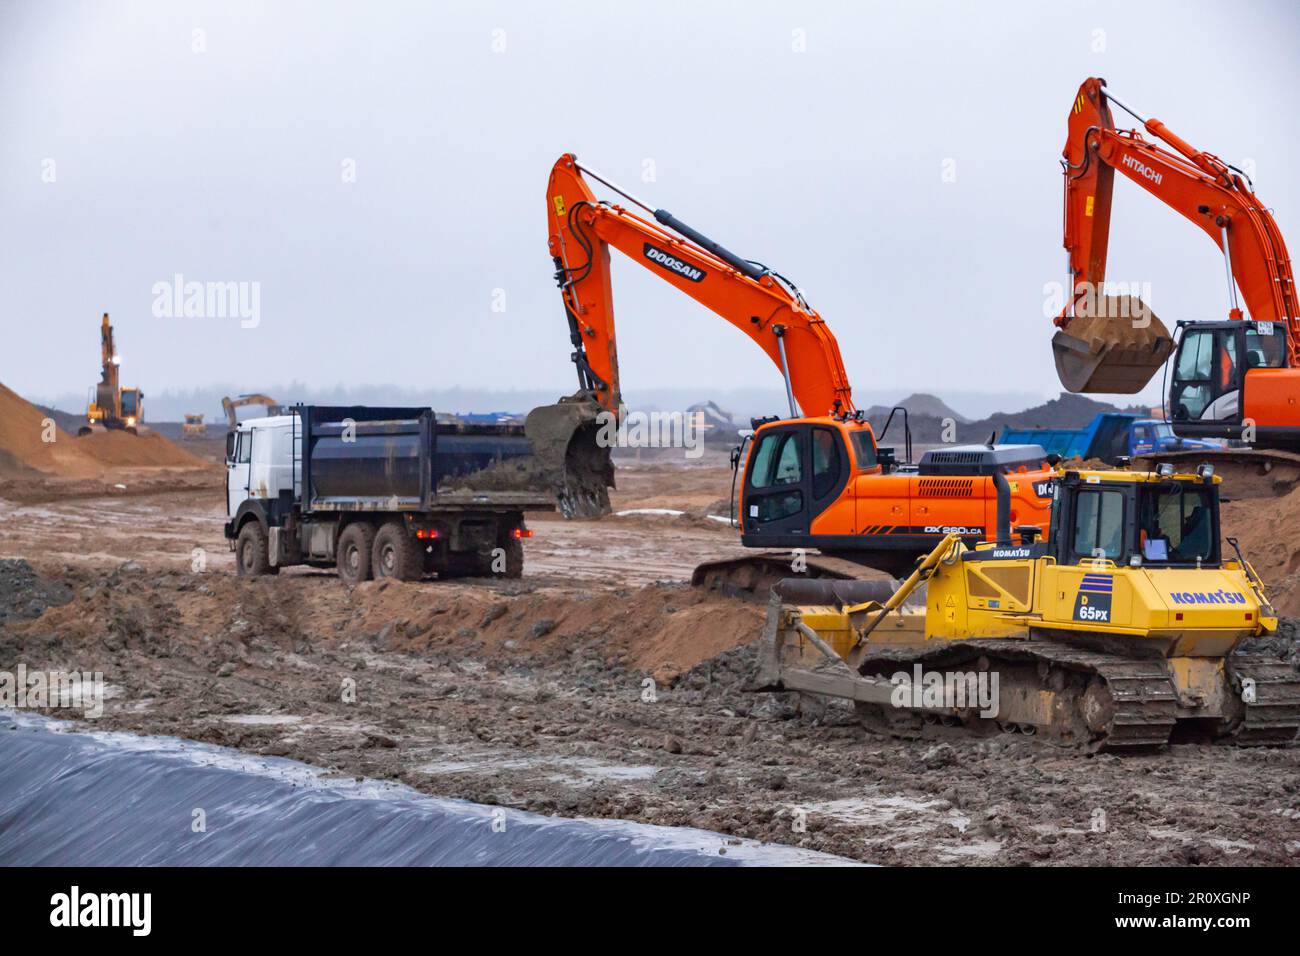 Ust-Luga, Leningrad oblast, Russia - November 16, 2021: Excavators Doosan and Hitachi, dozer Komatsu and dump truck on construction site. Rainy day, d Stock Photo